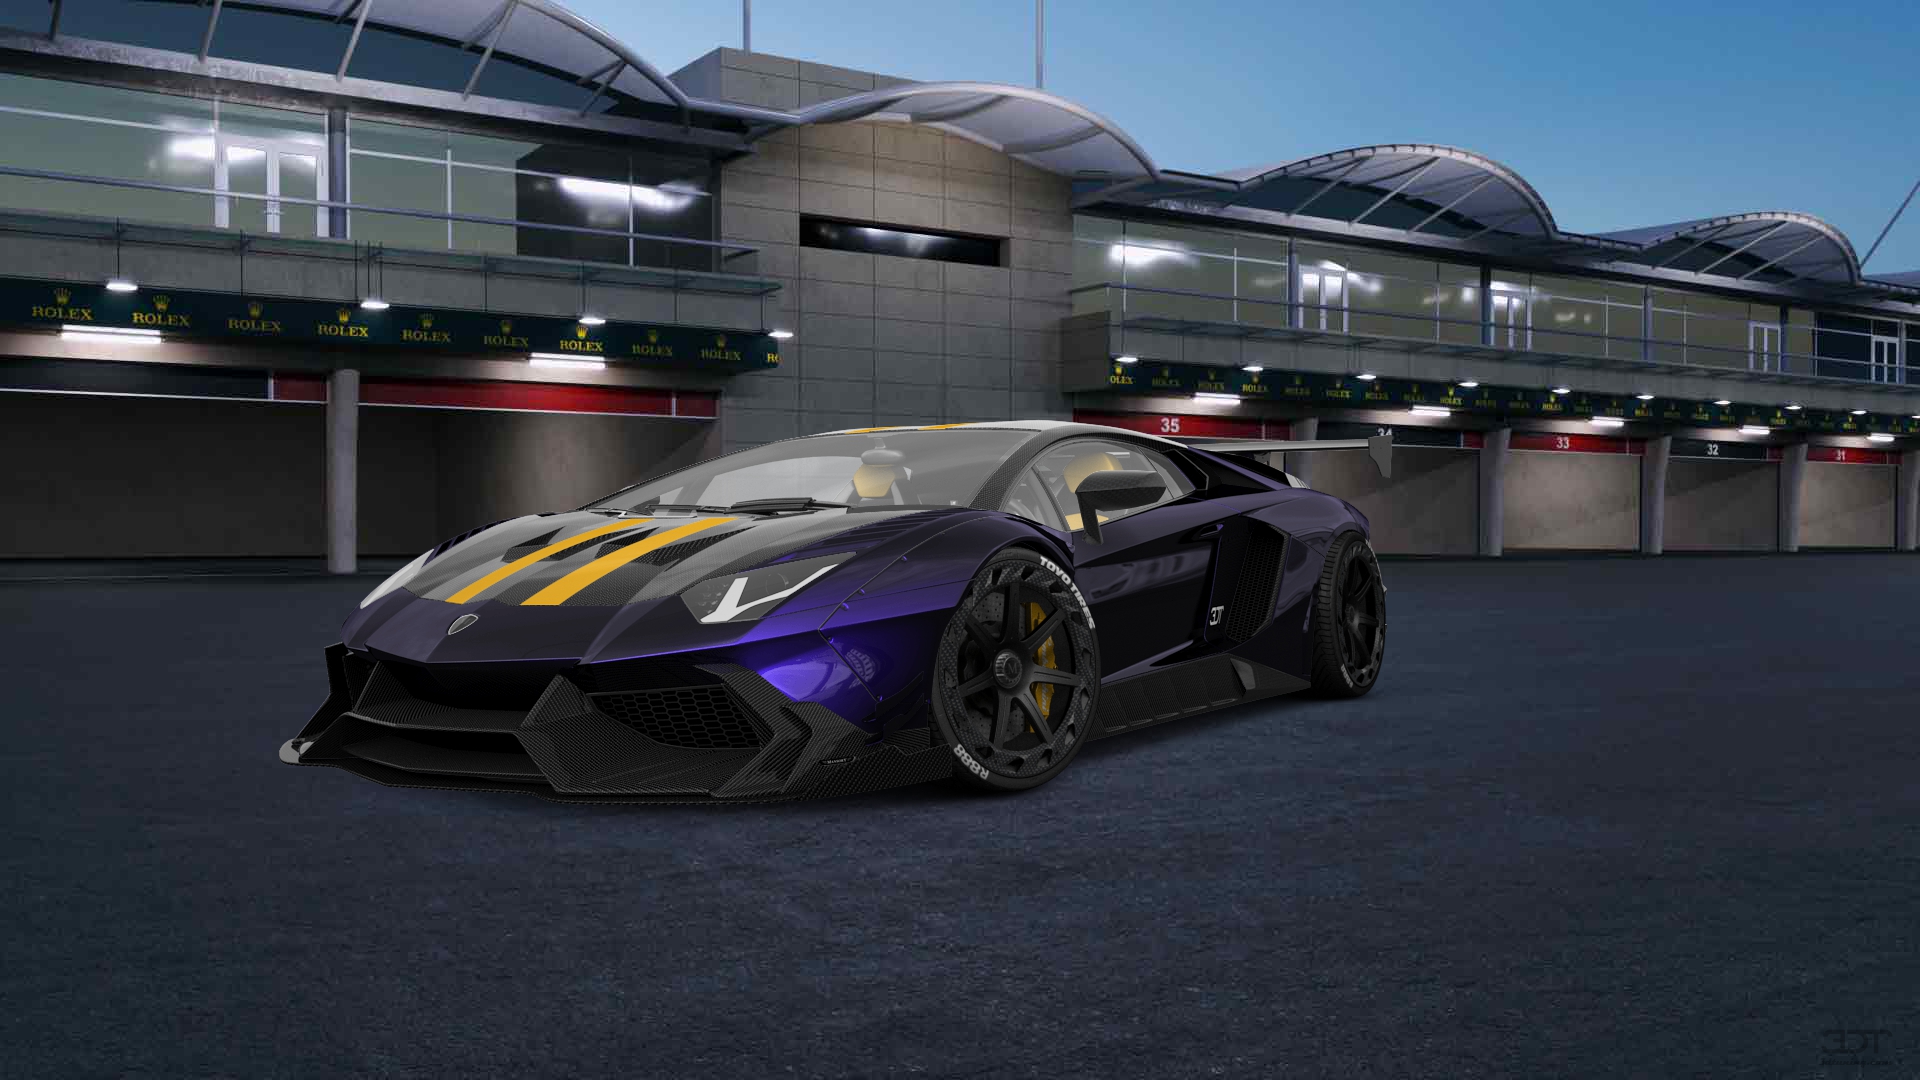 Lamborghini Aventador challenge 2 Door Coupe 4012